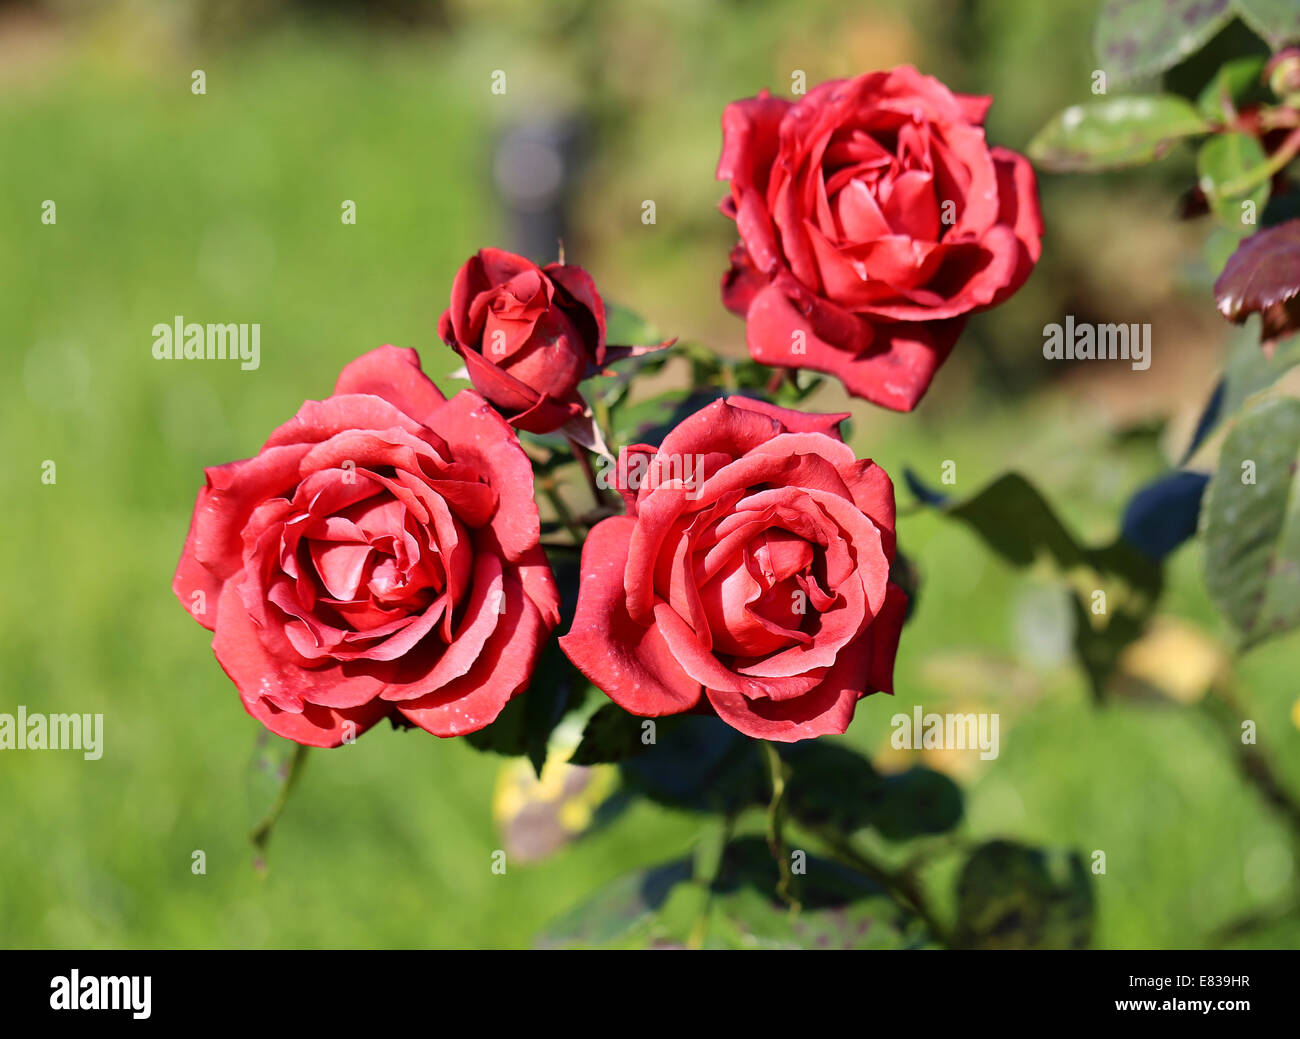 photo beautiful unusual roses Stock Photo - Alamy